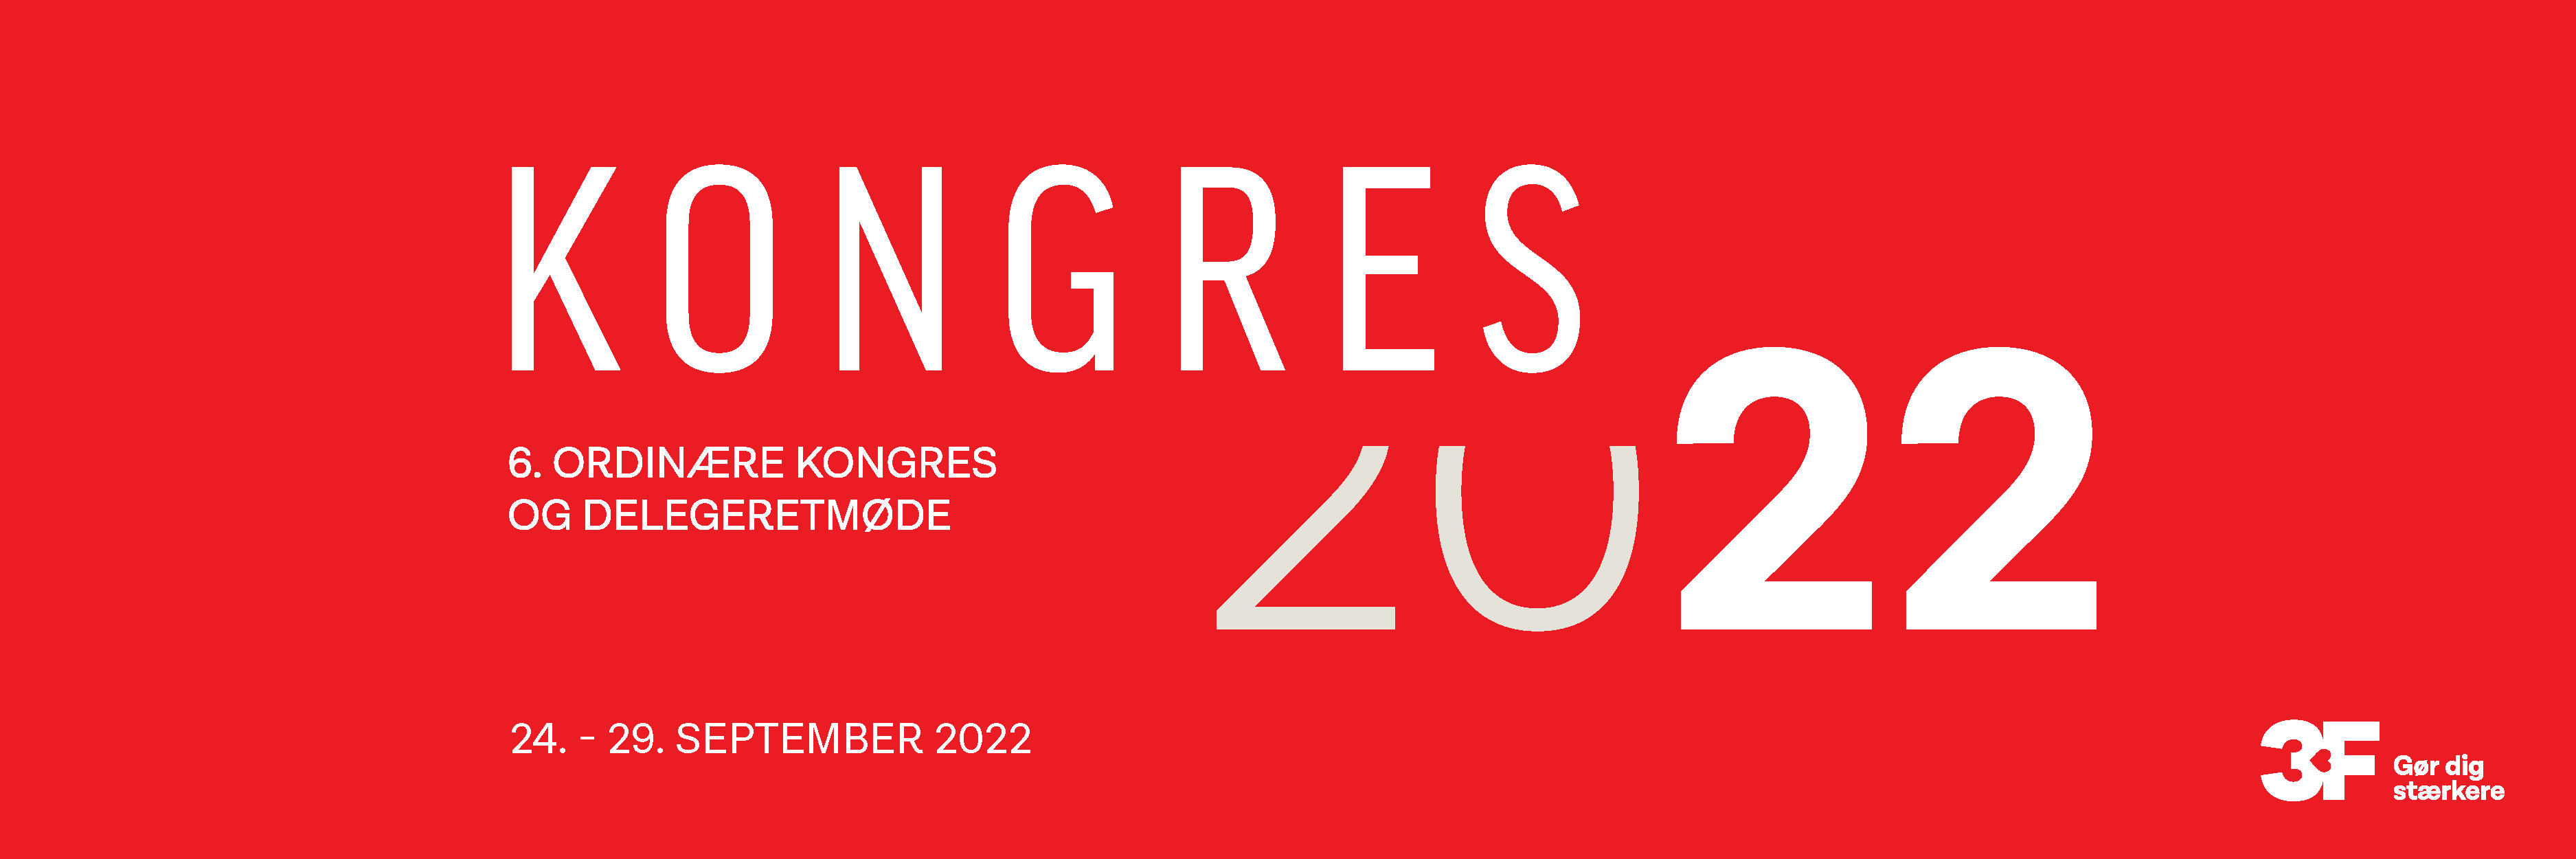 Kongres 2022 banner 1800x600